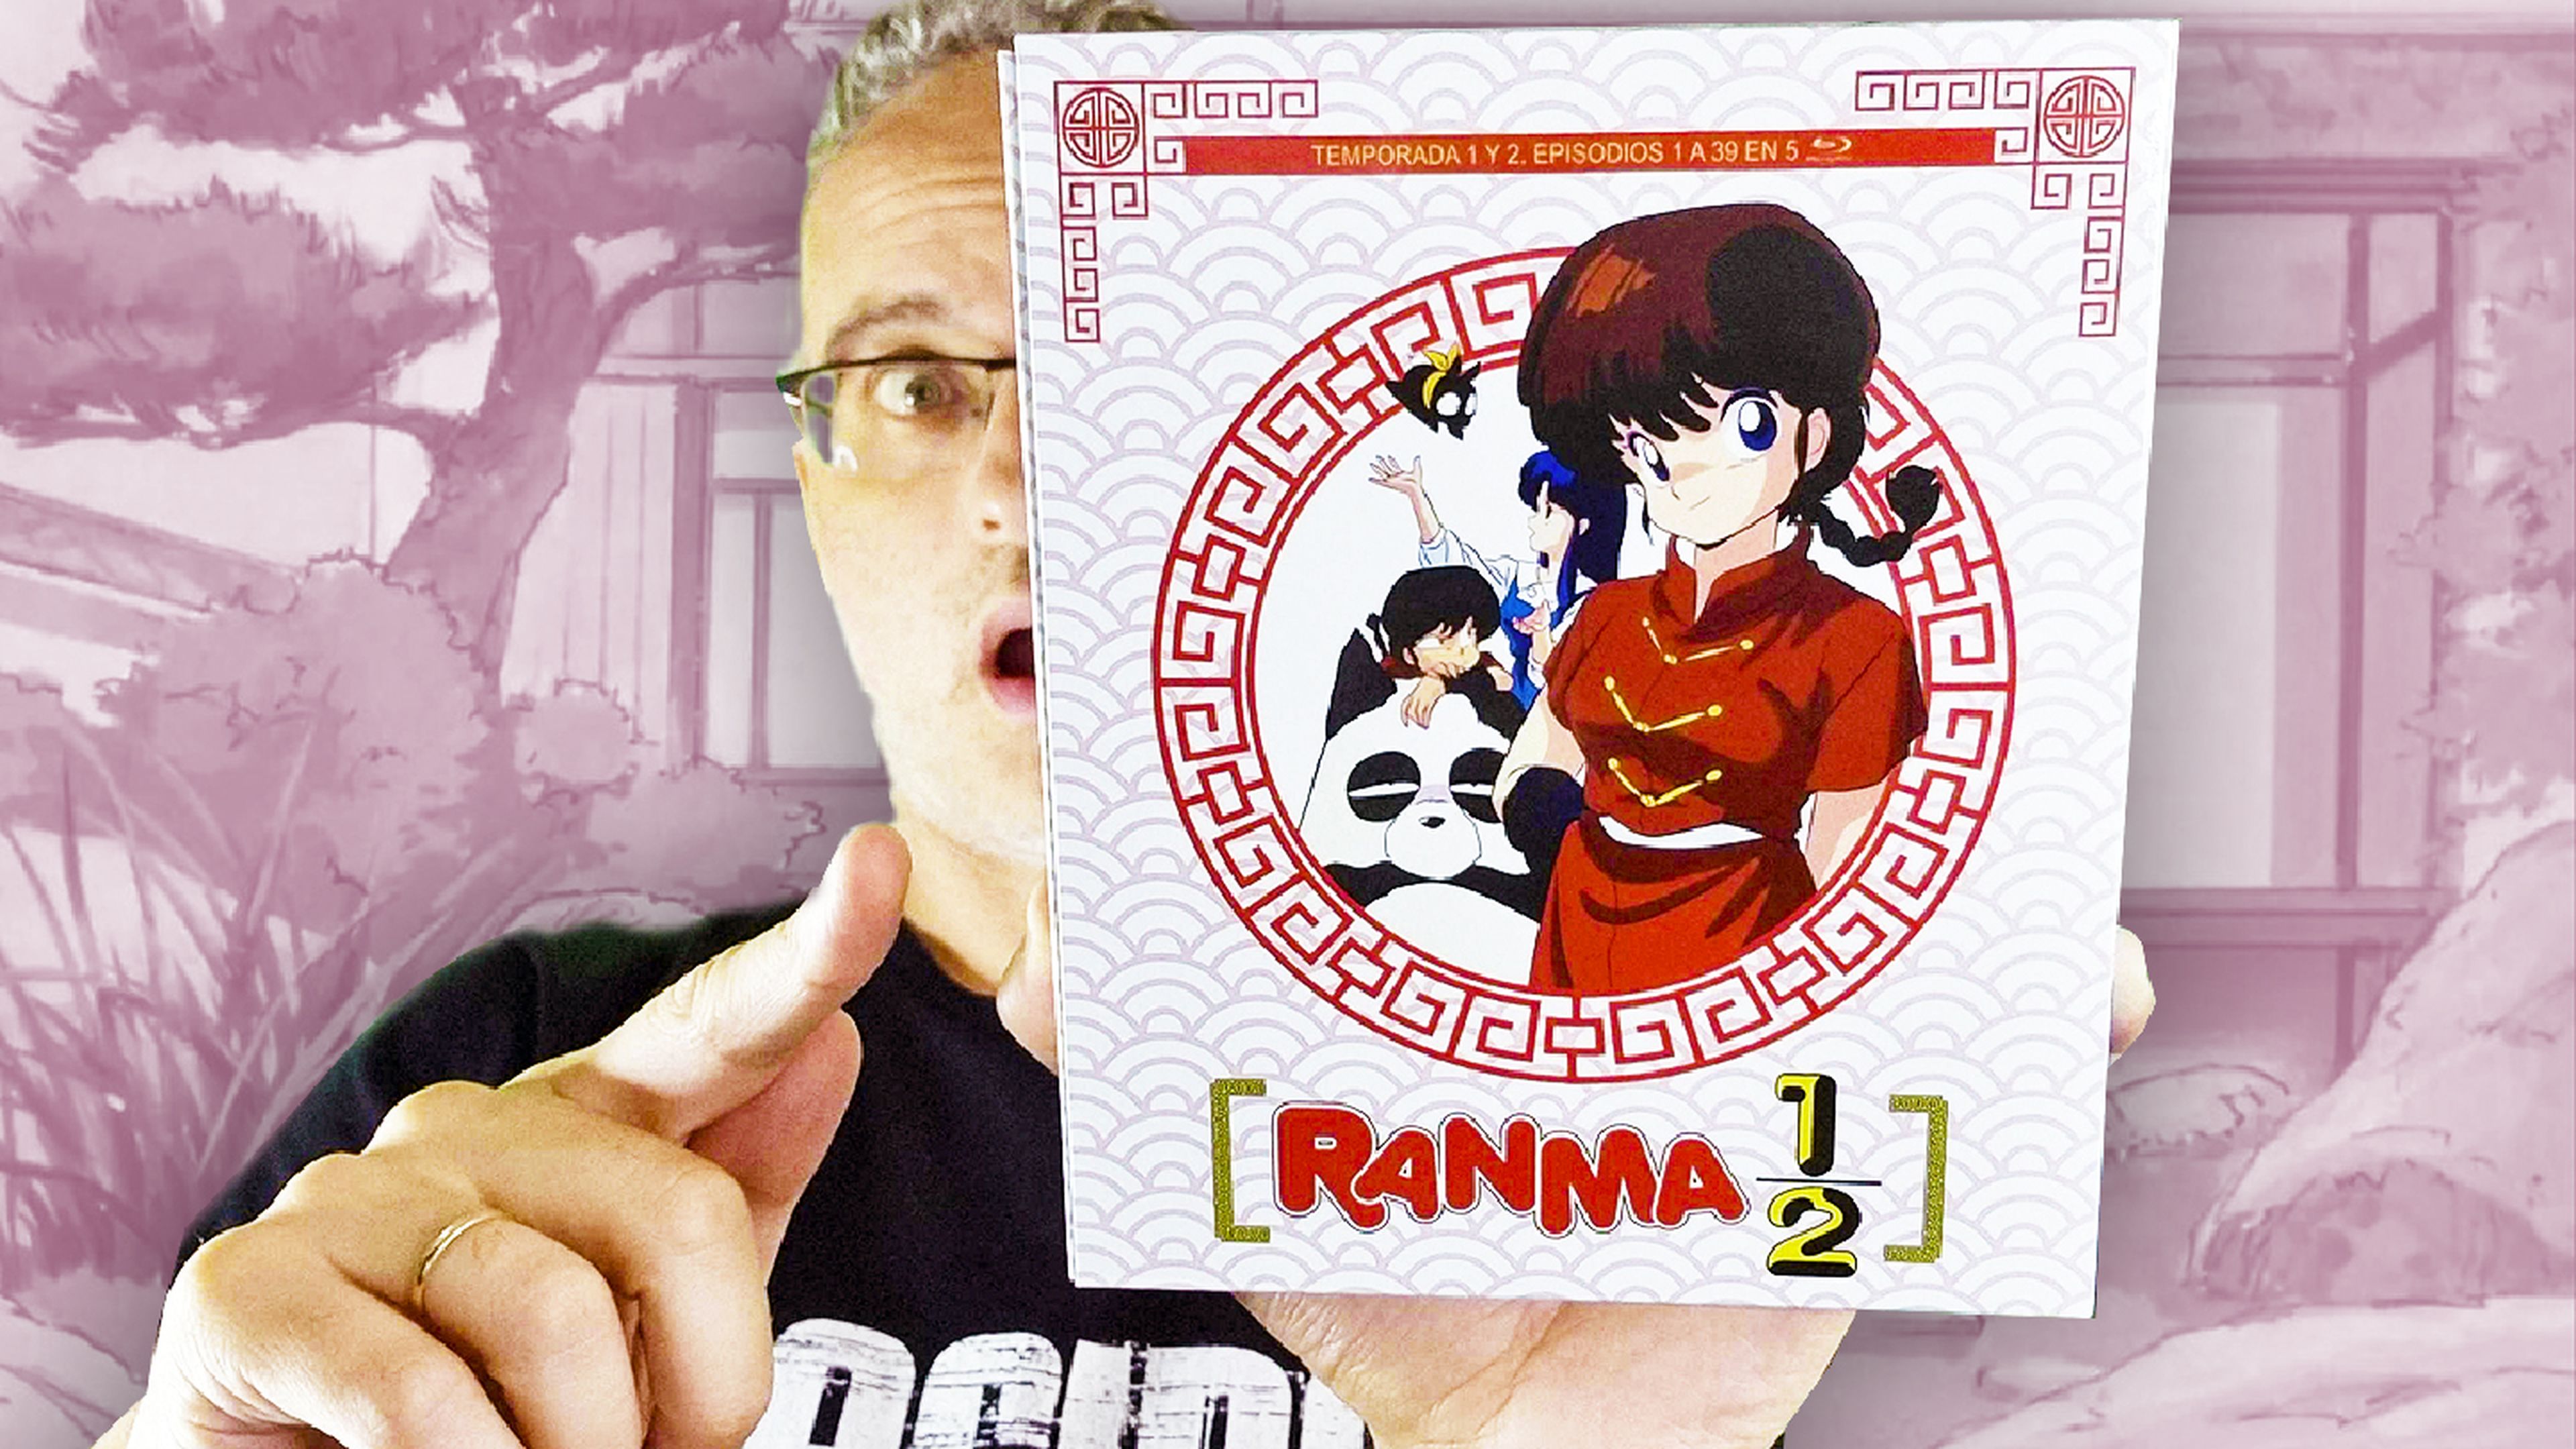 Ranma 1/2 blu ray unboxing